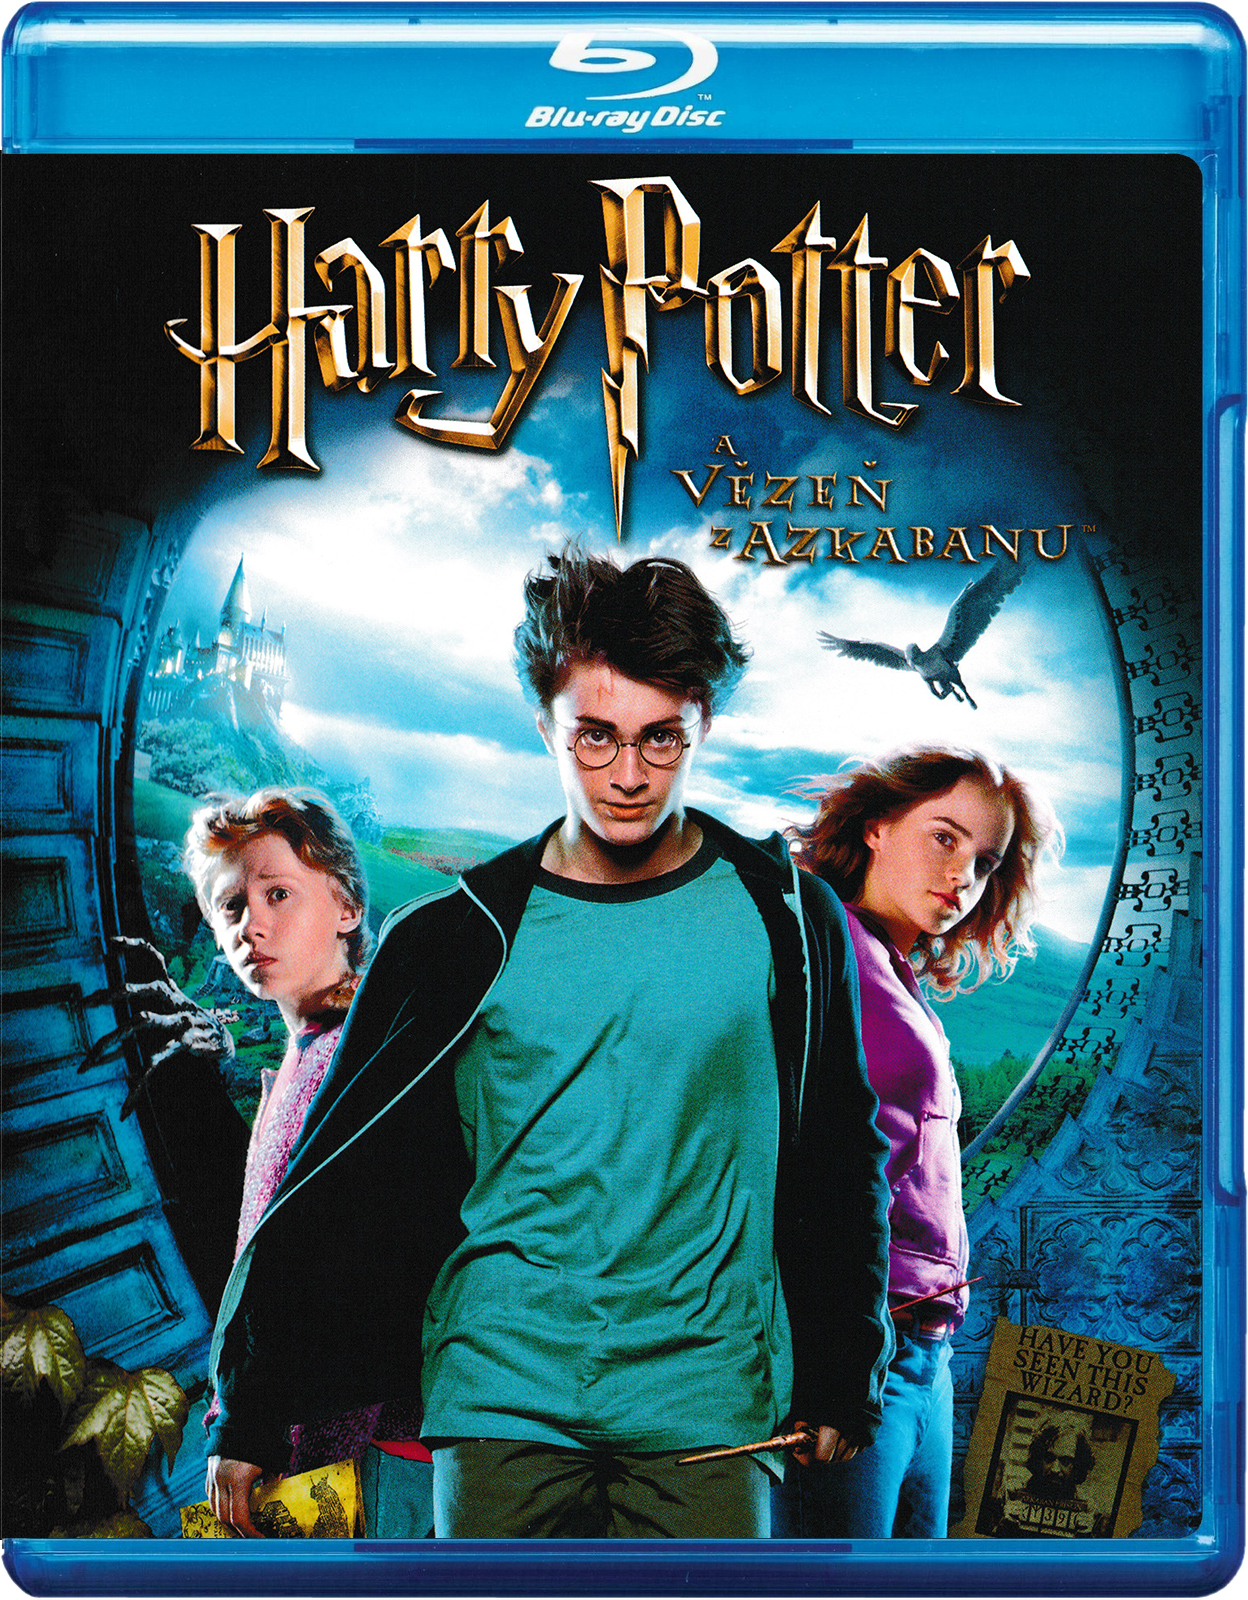 Stiahni si HD Filmy Harry Potter a vezen z Azkabanu/arry Potter and the Prisoner of Azkaban (2004)(CZ/EN)[1080pHD] = CSFD 85%